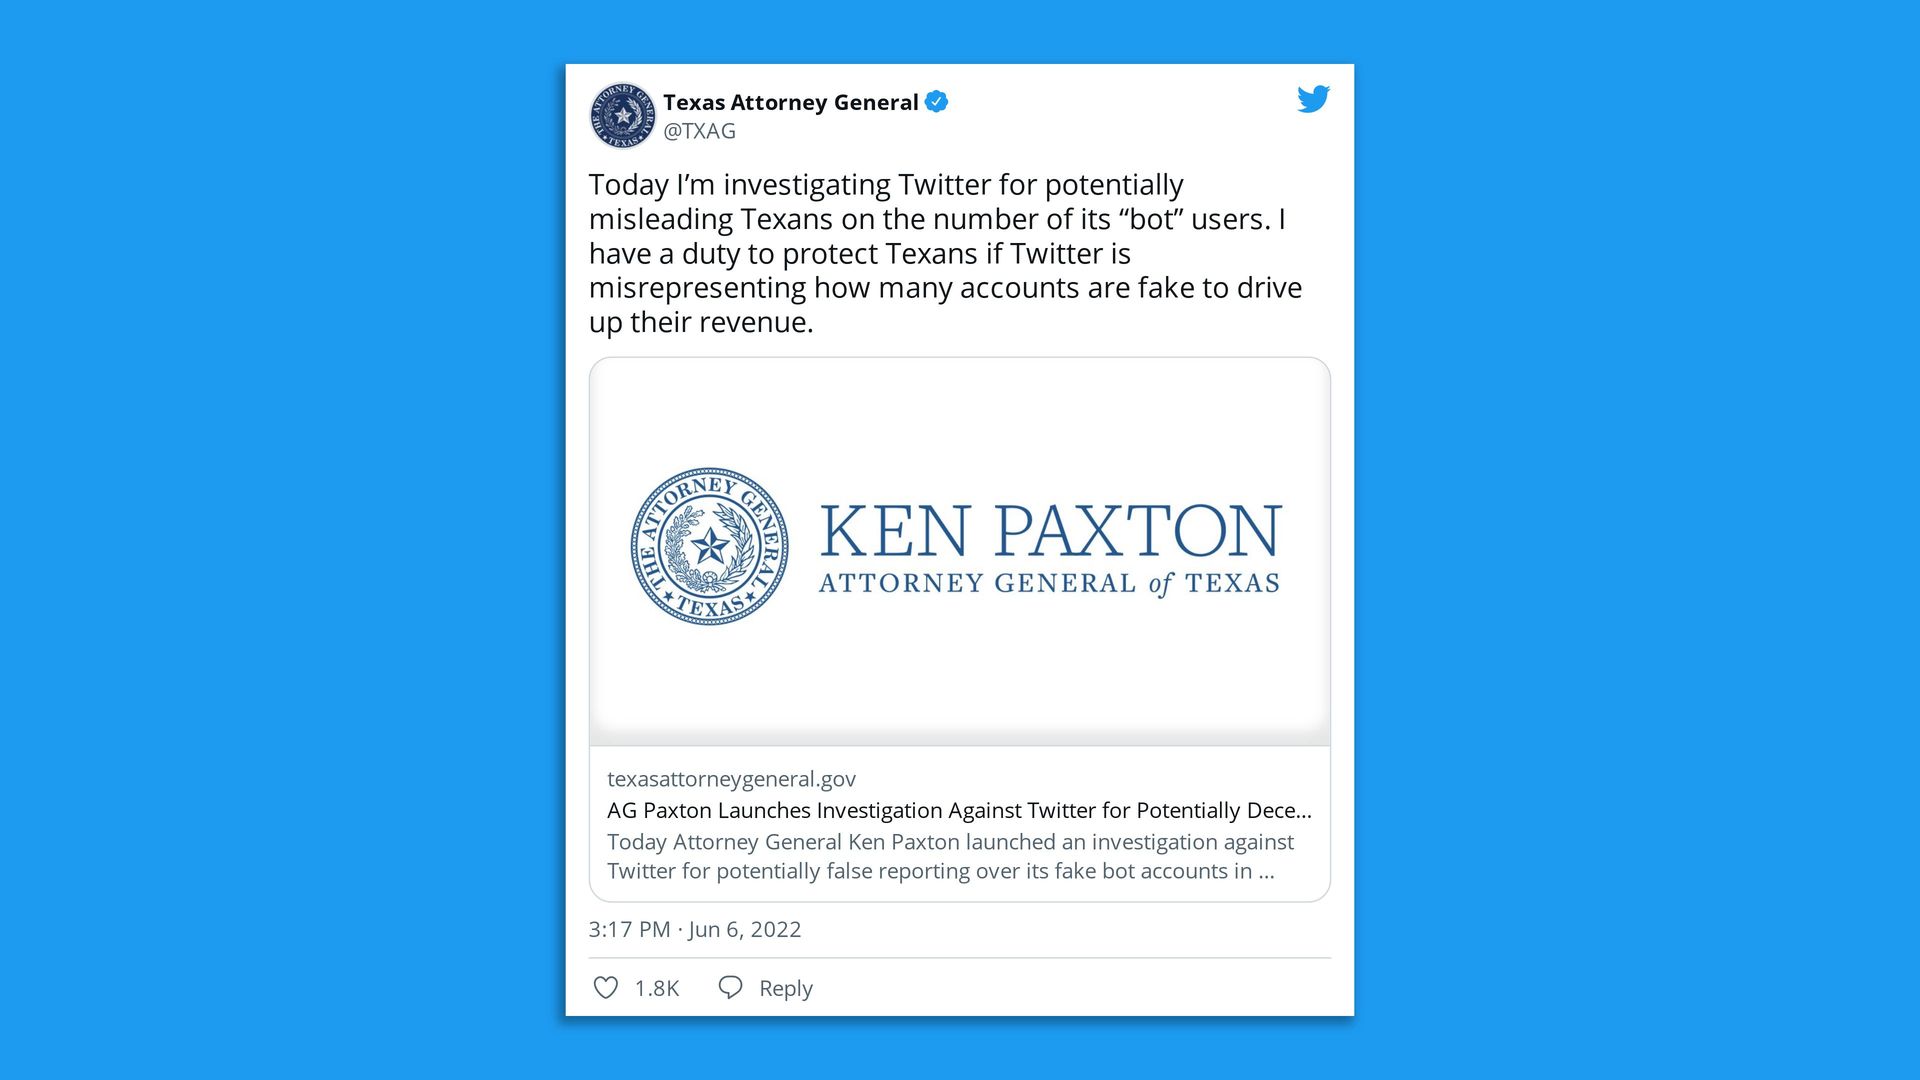 Ken Paxton announcement of Twitter investigation